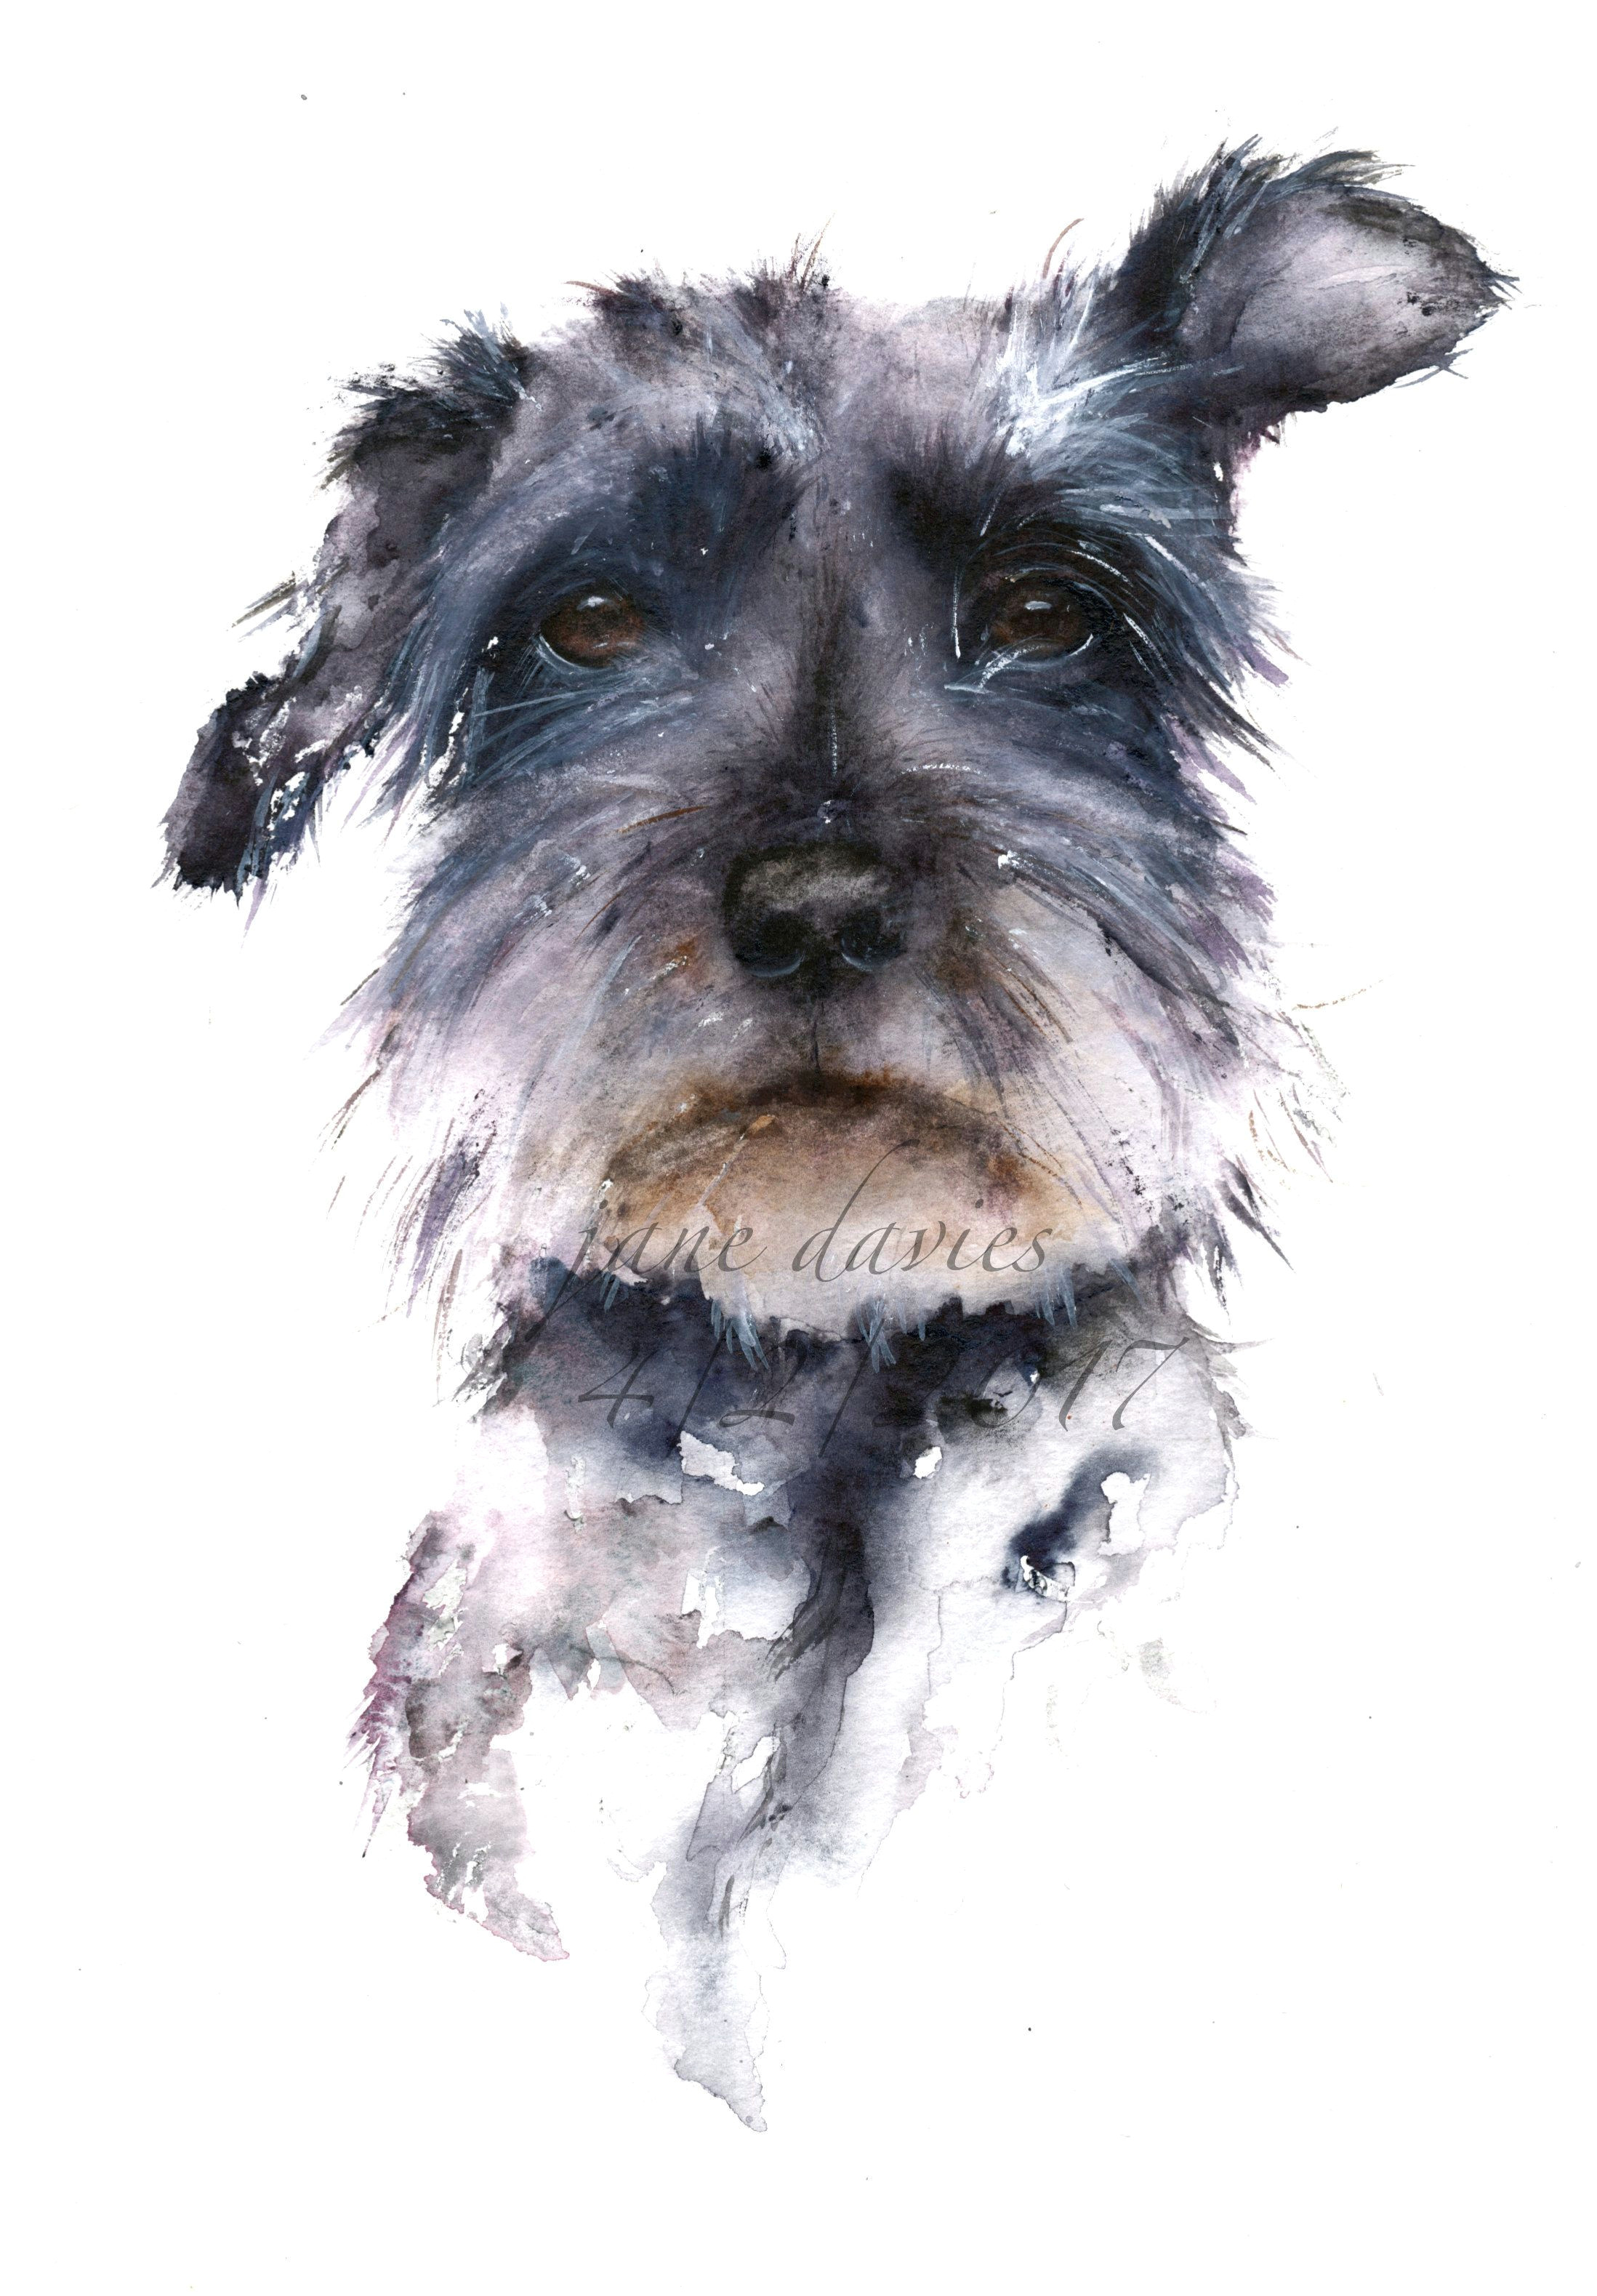 schnauzer painted in watercolour by artist jane davies watercolorarts art aquarelle dog portraits